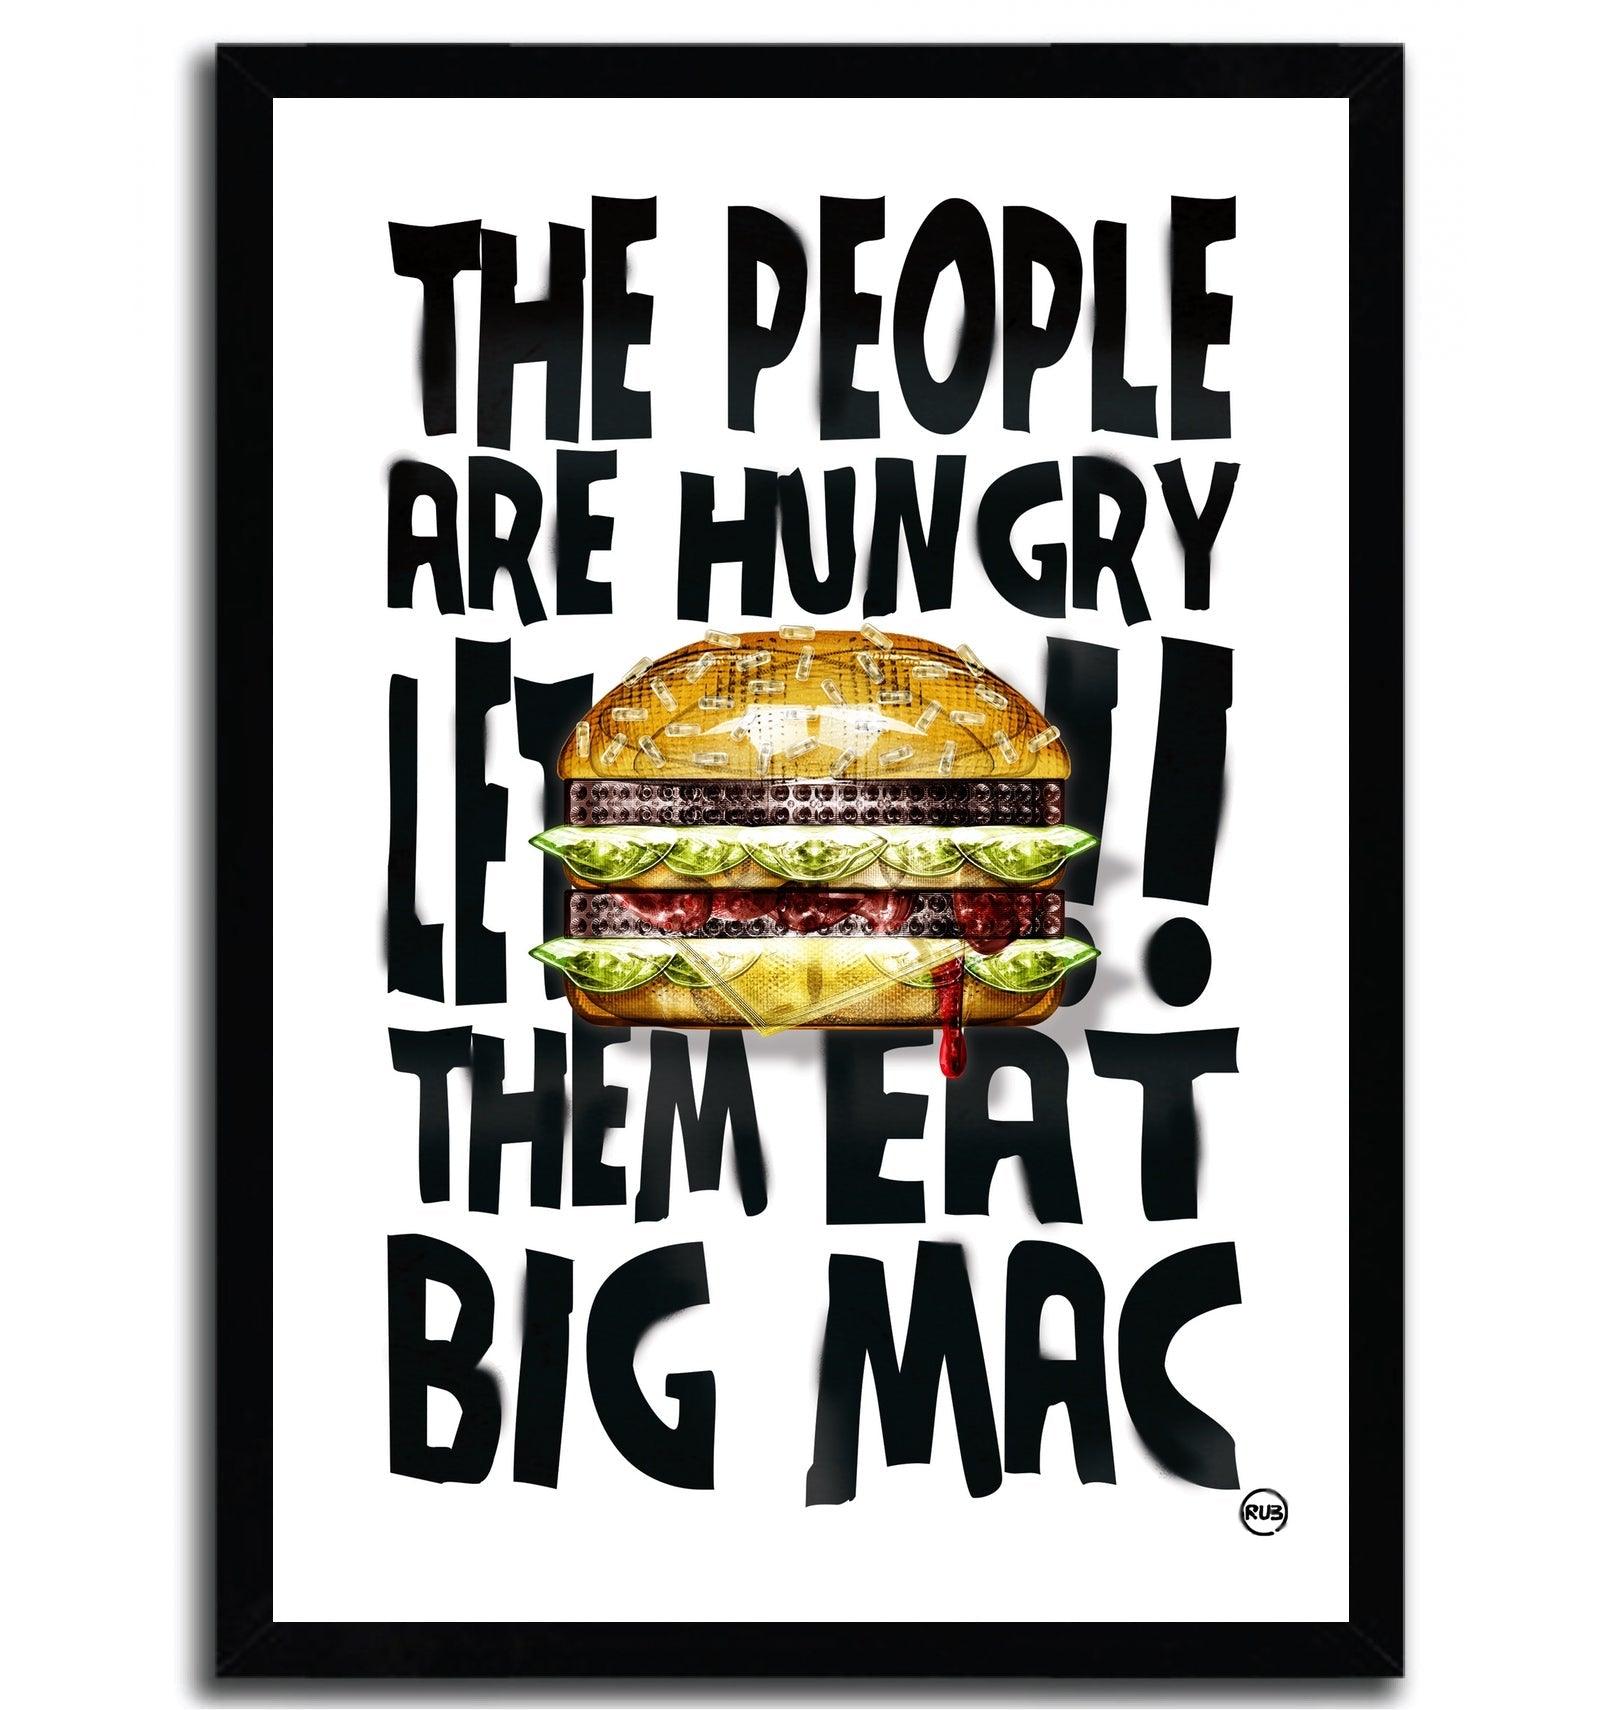 Affiche ARTPRINT BIG MAC  par Rubiant ArtAndToys